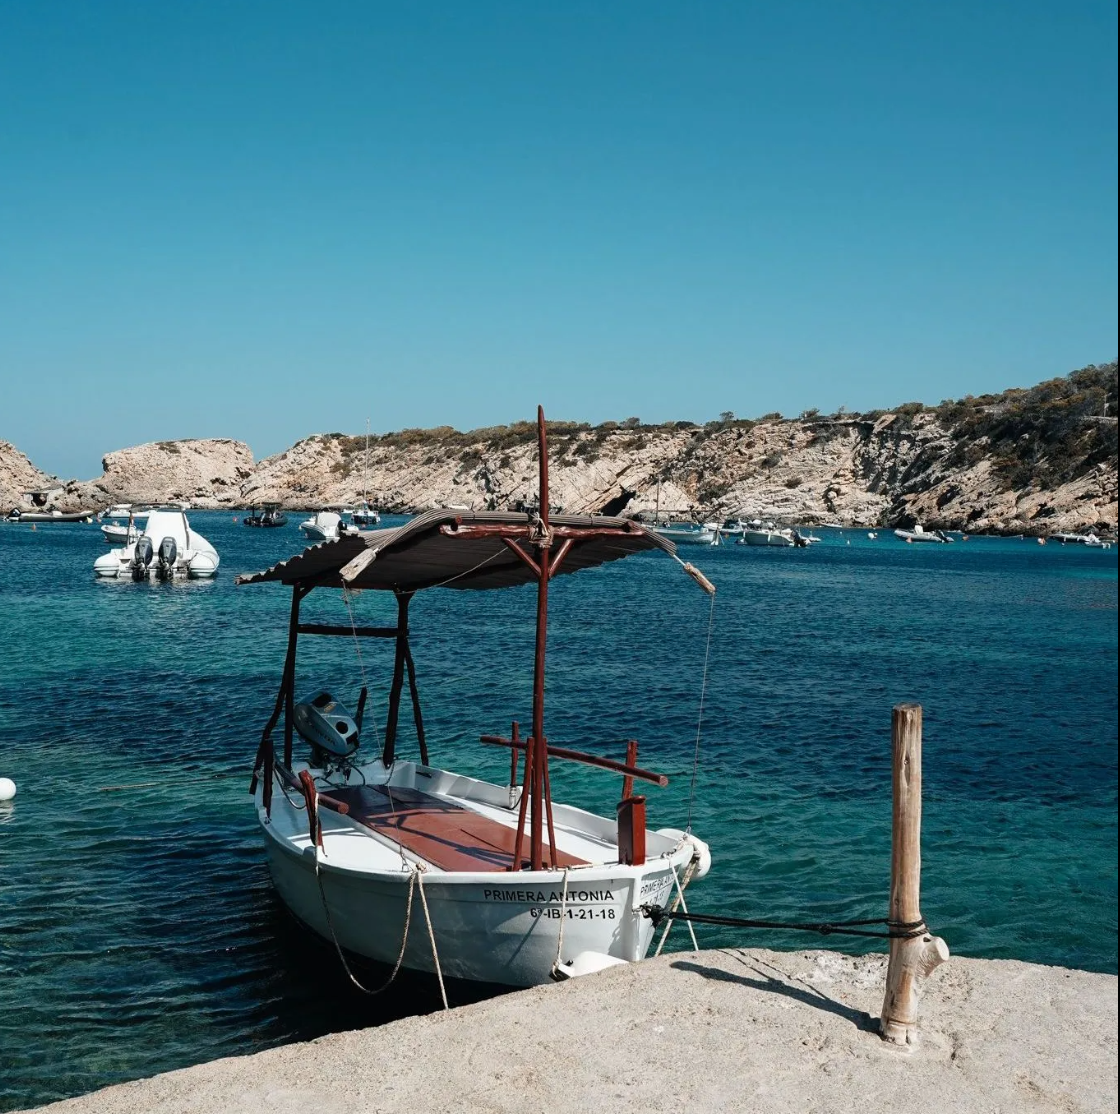 Summer vacation in Ibiza? Huren op Ibiza still has beautiful homes available!